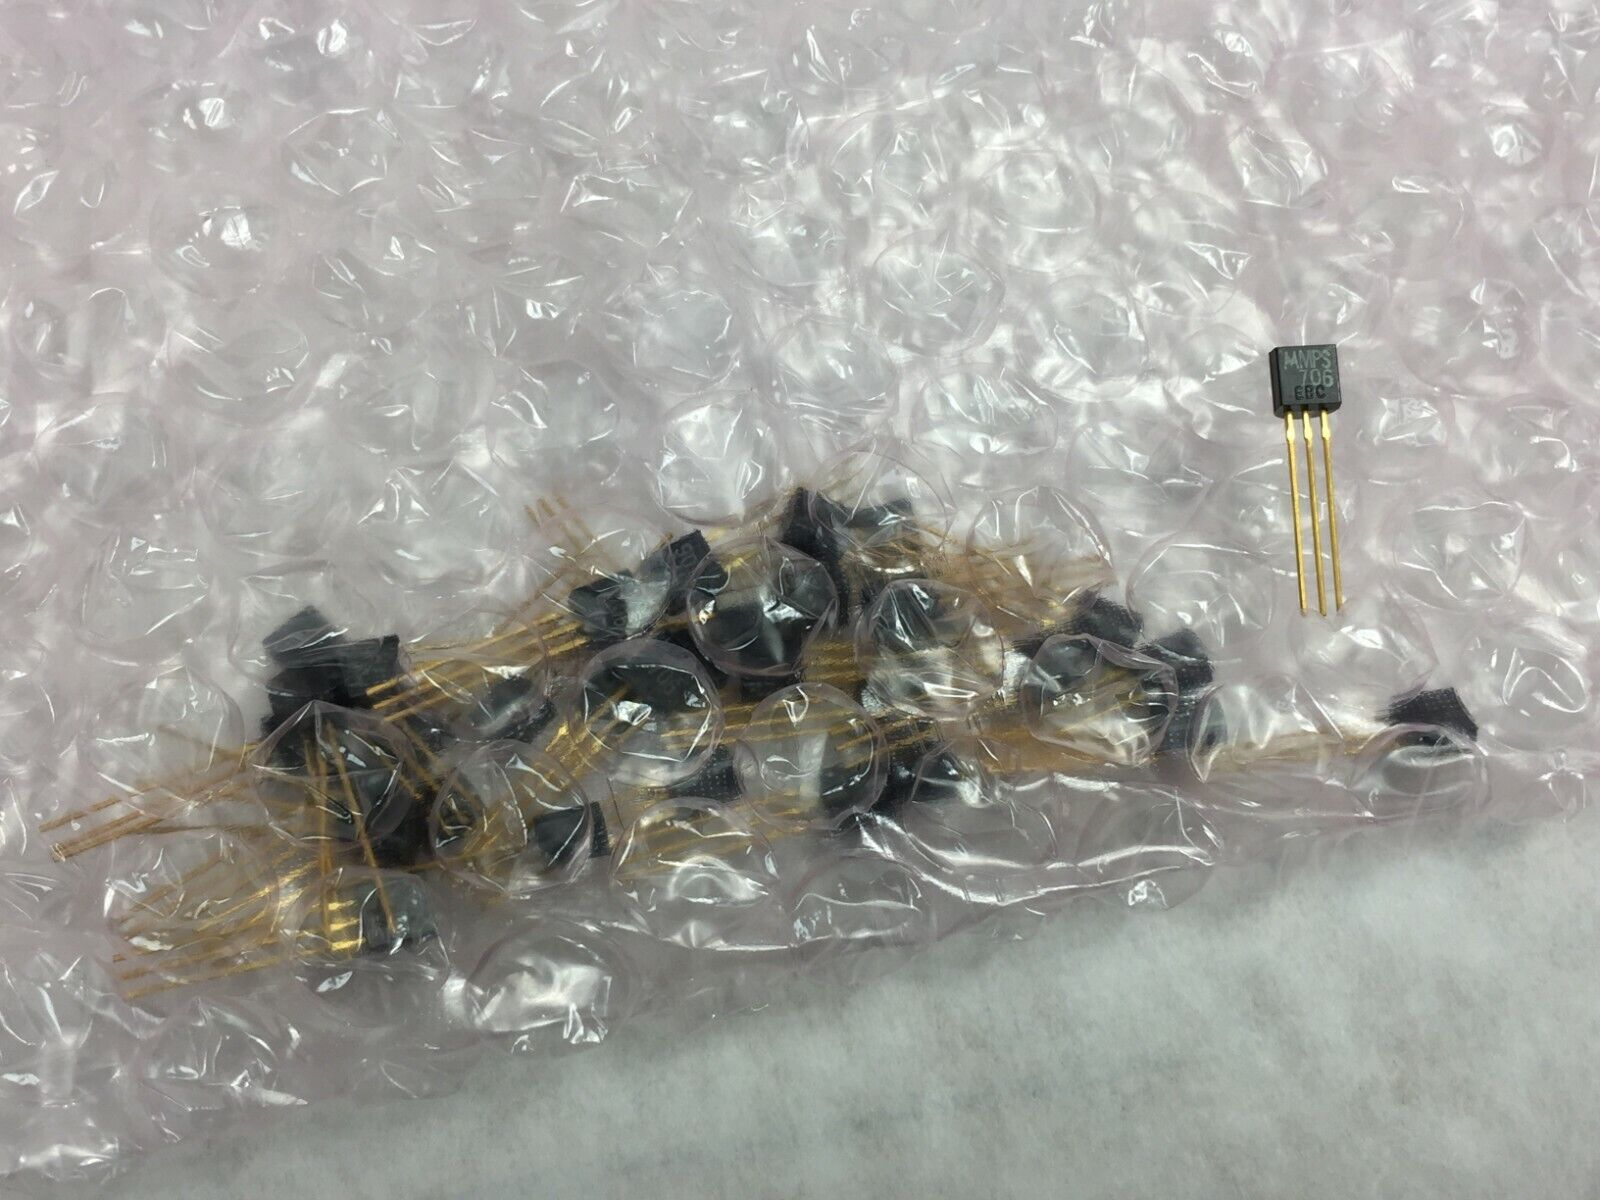 MMPS706 Transistor   Lot of 33   NOS